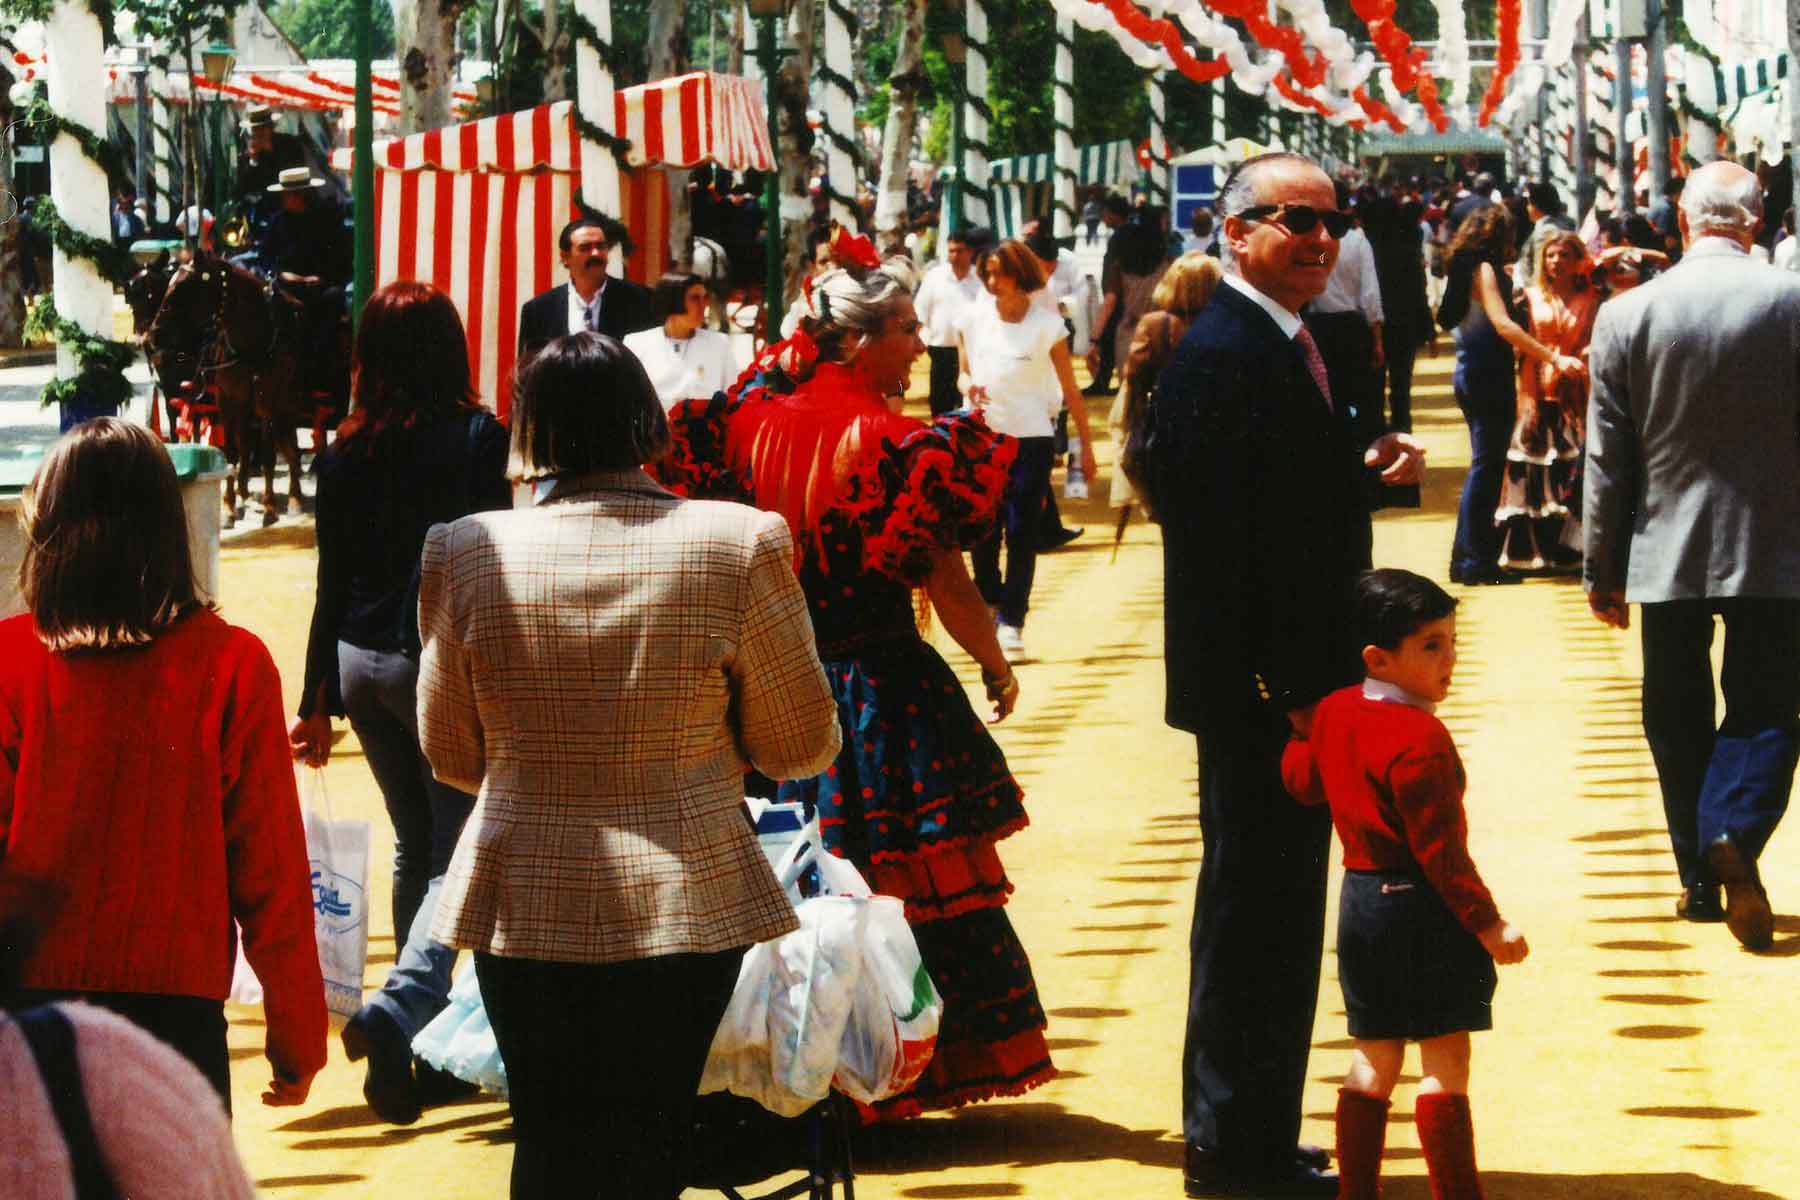 Seville Fair 1998 - Spain Photo Journal - Steven Andrew Martin - Study Abroad - College Consortium International Studies - CCIS